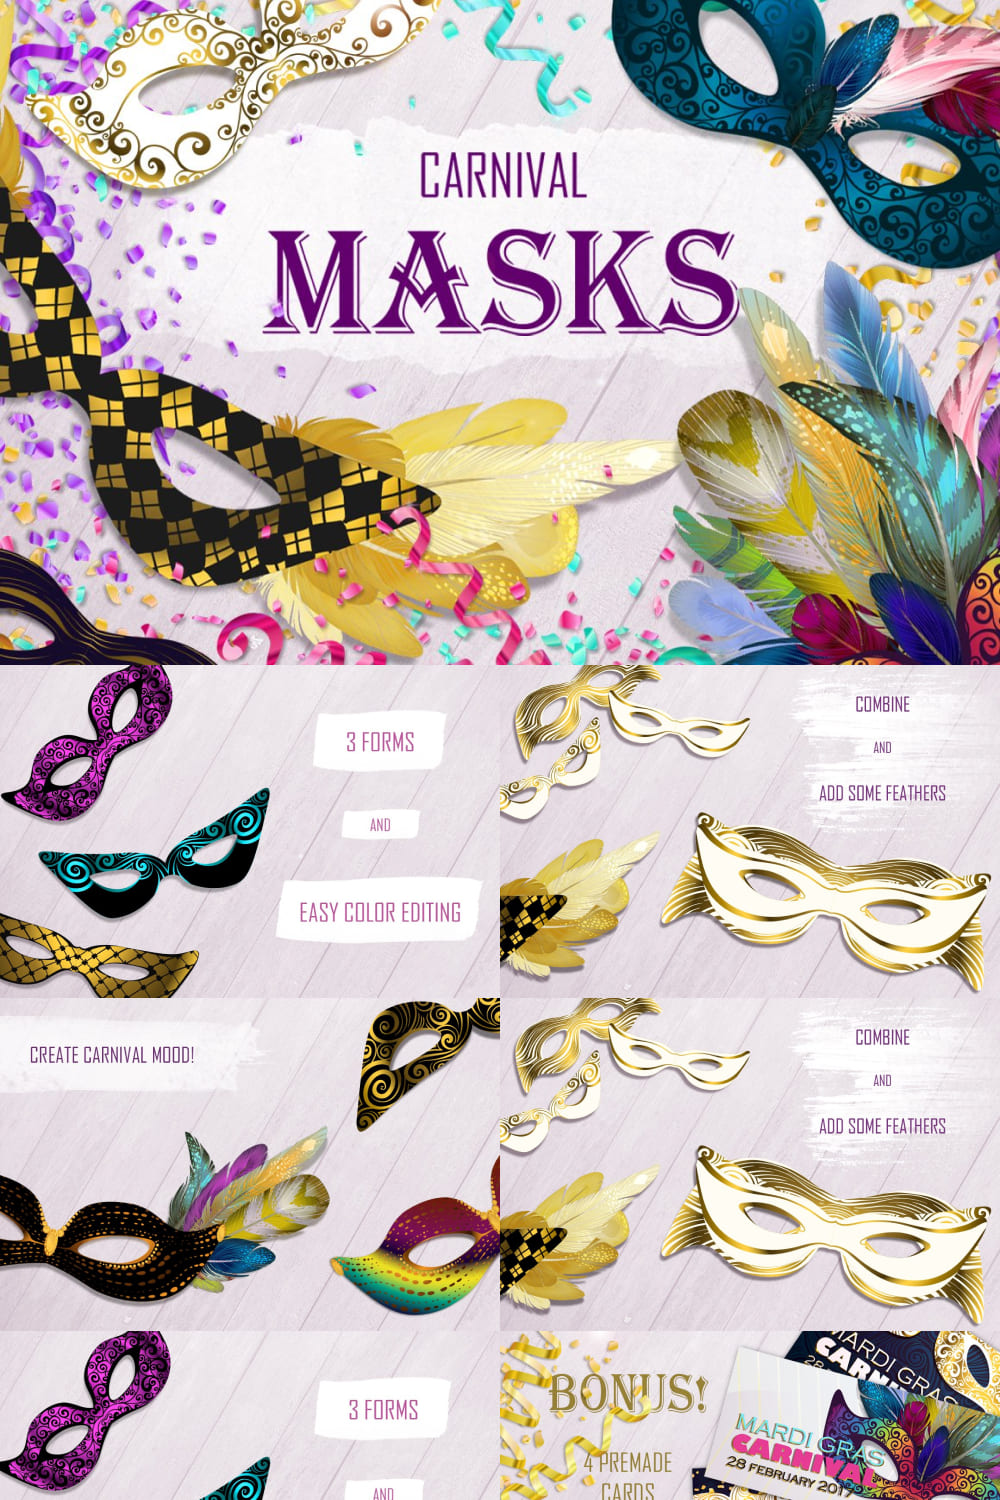 Carnival Masks - pinterest image preview.